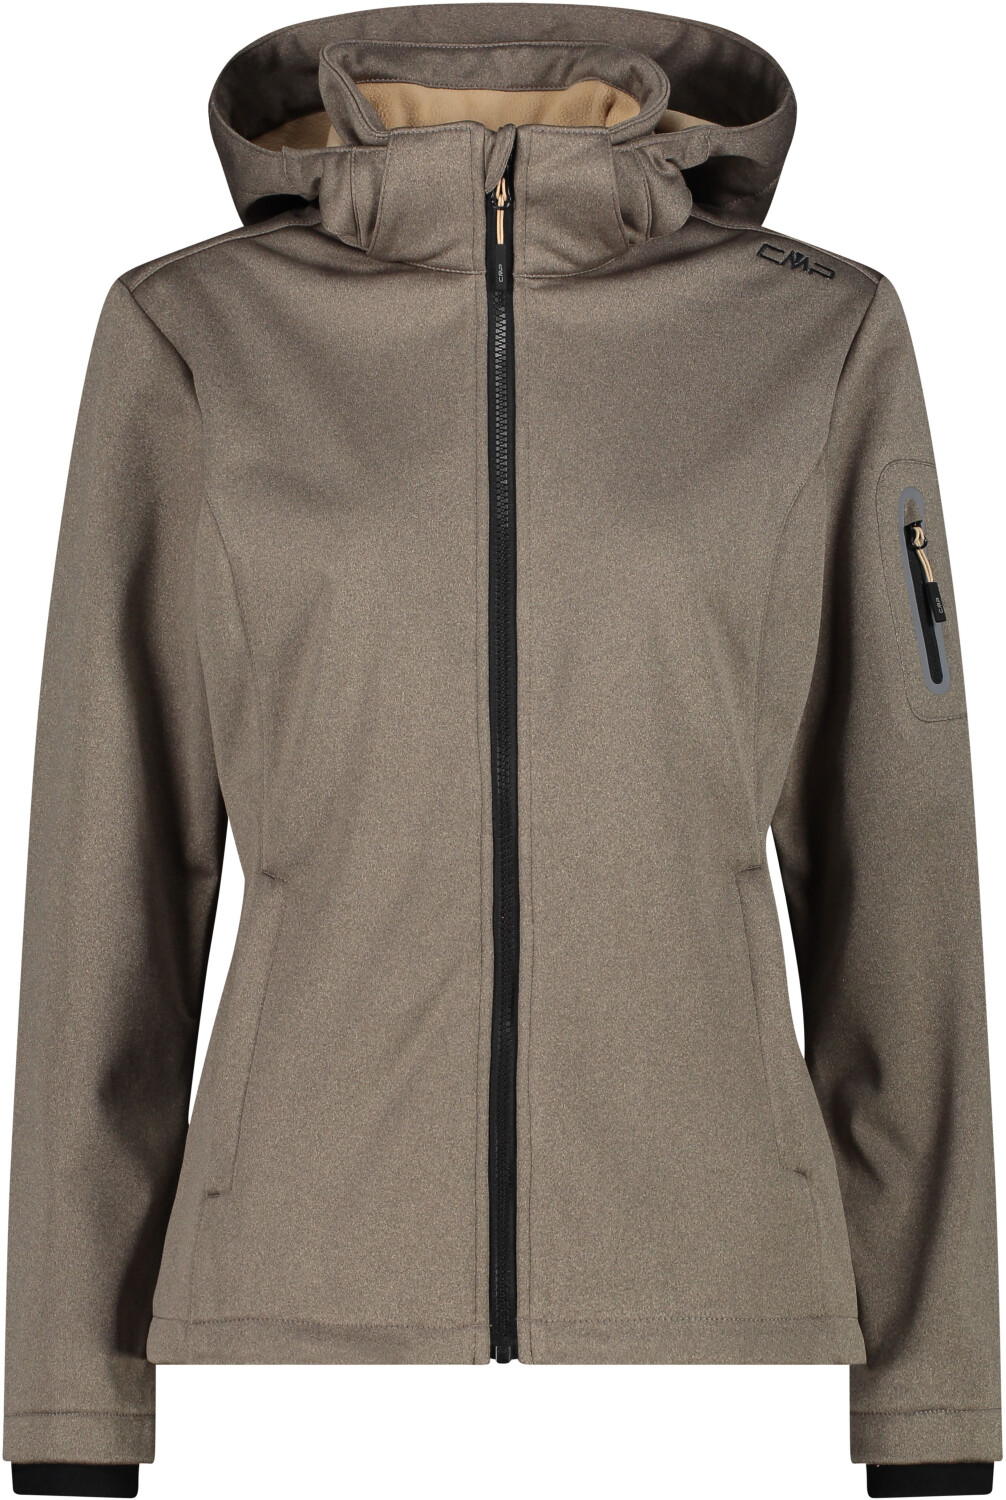 CMP Women\'s Mélange Softshell Jacket ab (39A5006M) bei Preisvergleich € | 53,91 mel./nero sesamo